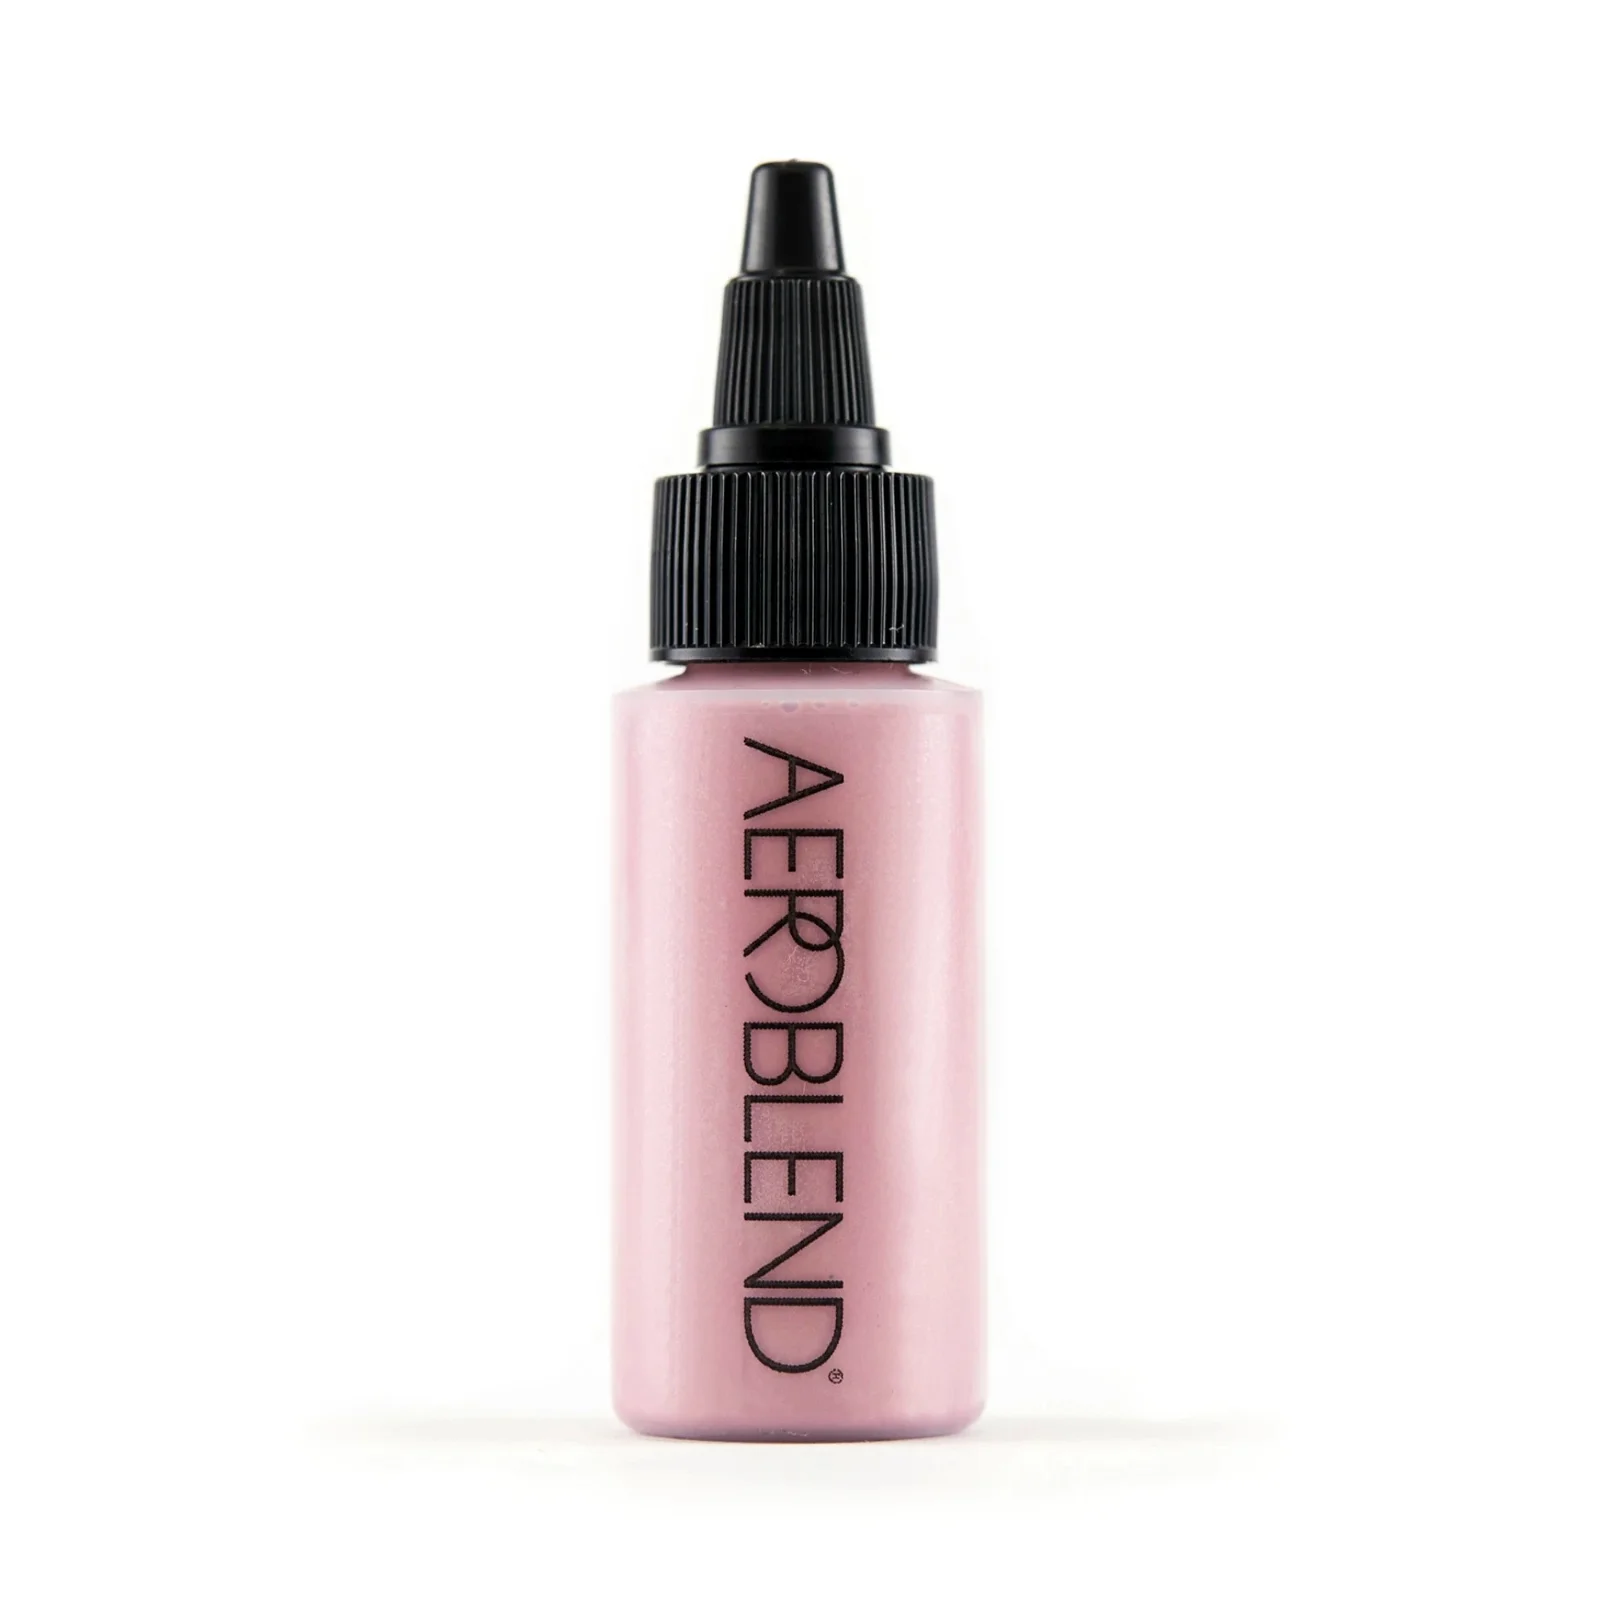 Image of Aeroblend Airbrush Blush